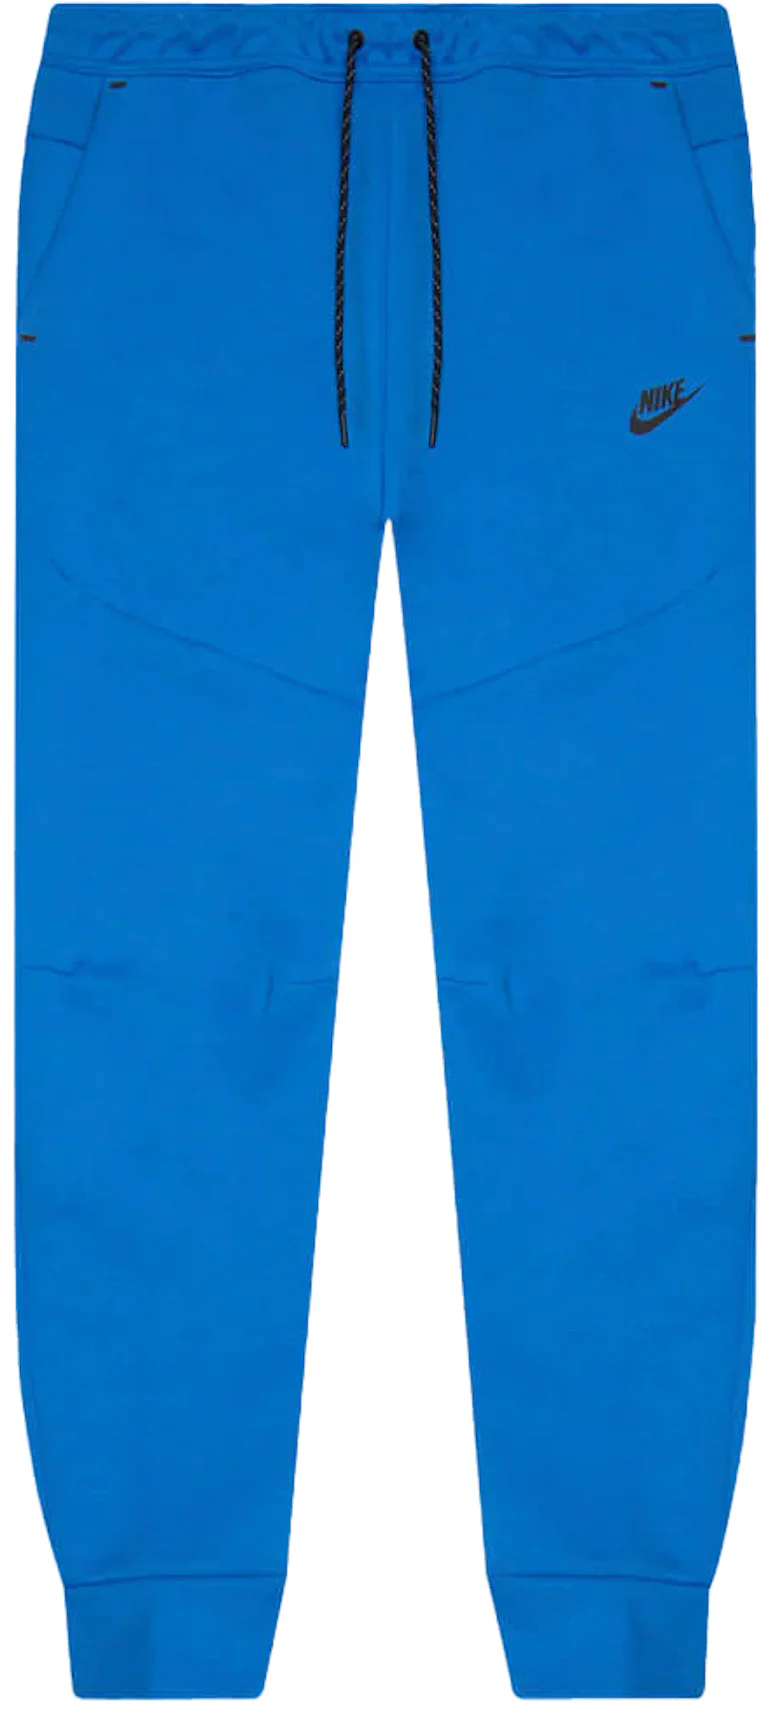 350 Cobalt/Royal Blue Pants ideas  royal blue pants, blue pants, fashion